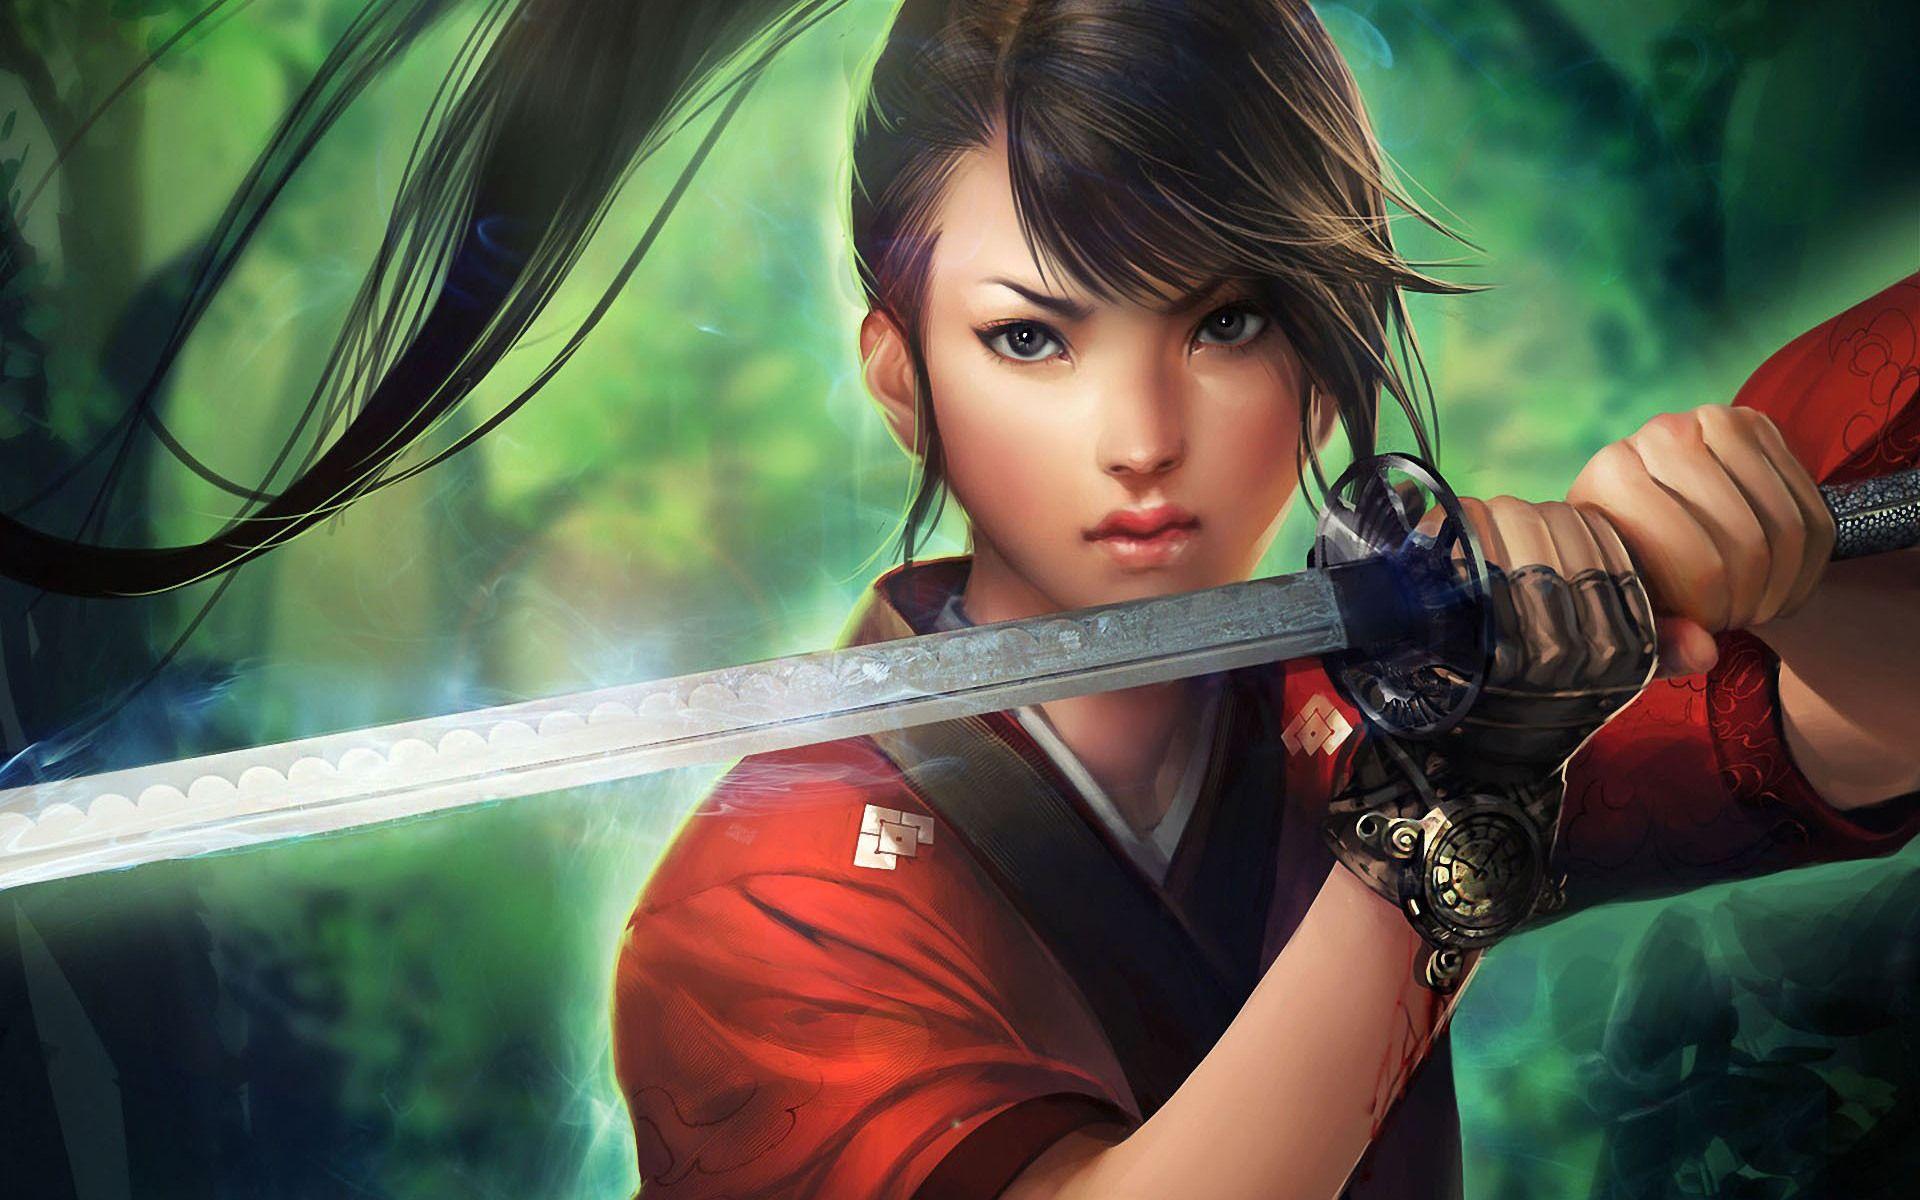 Swordswoman. Warrior woman, Warriors wallpaper, Fantasy women